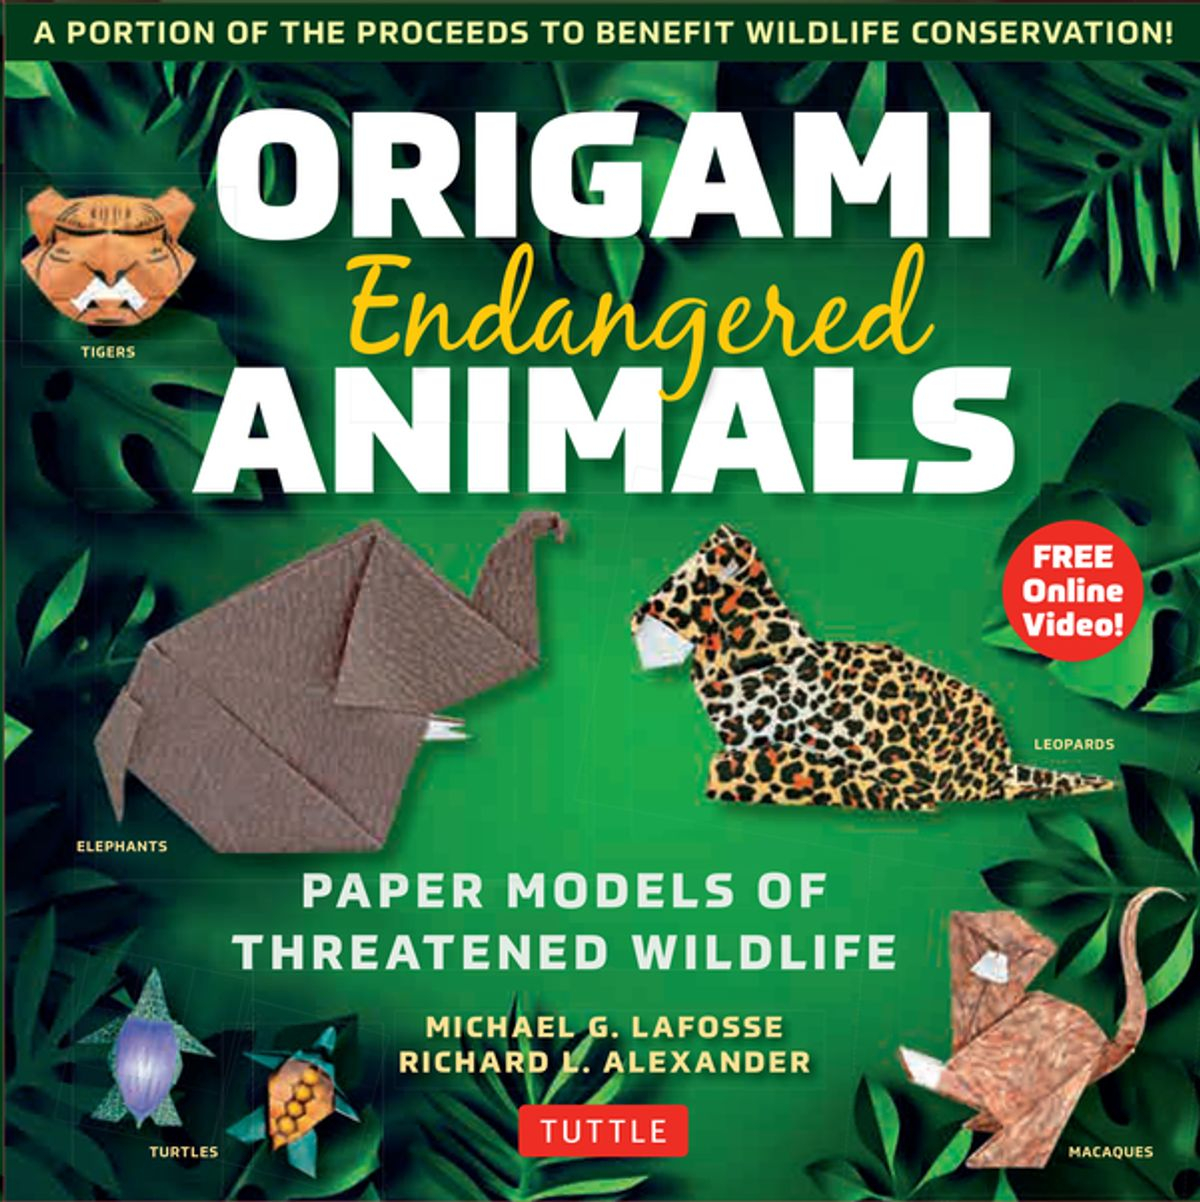 Origami Animals Instructions Printable Origami Endangered Animals Ebook Ebook Michael G Lafosse Rakuten Kobo